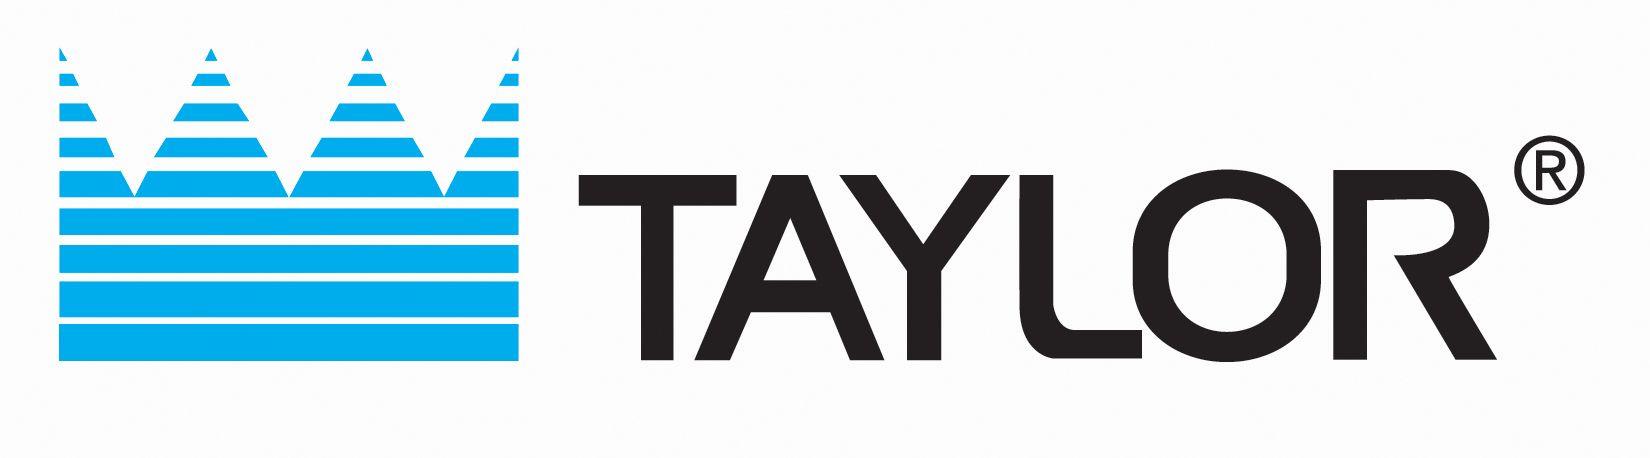 Google Taylor Logo - Taylor Logos